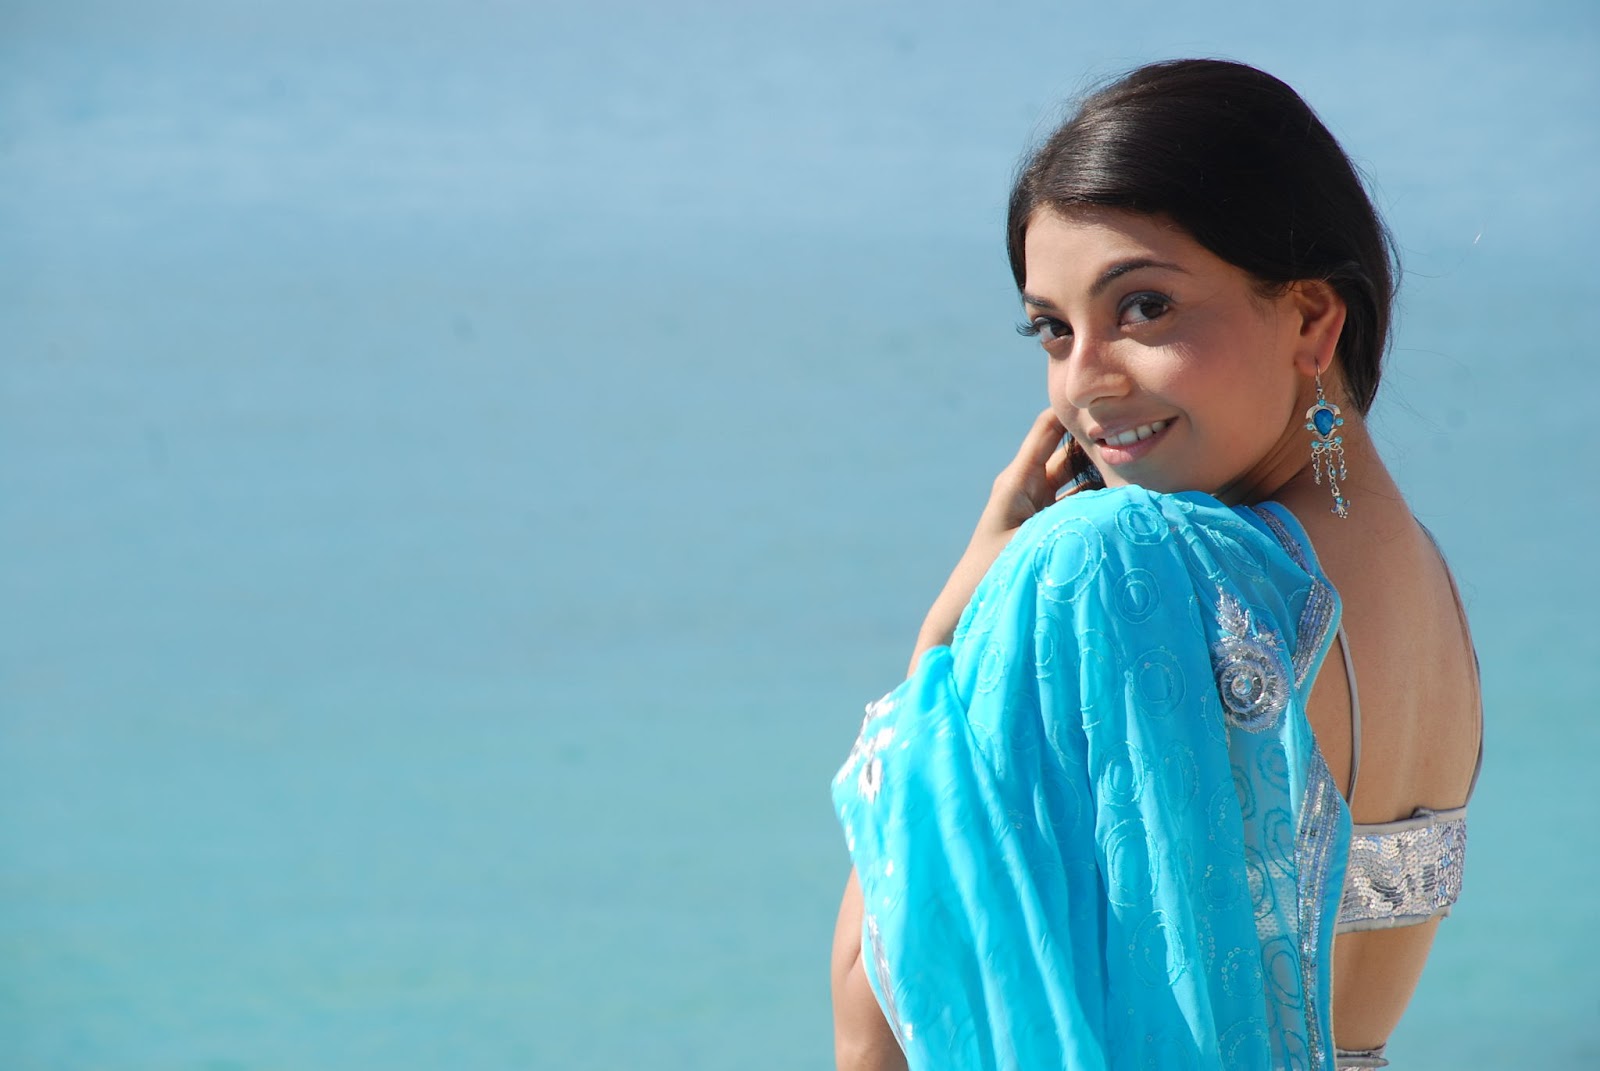 Best Kajal Agrawal Images On Pinterest Indian Actresses